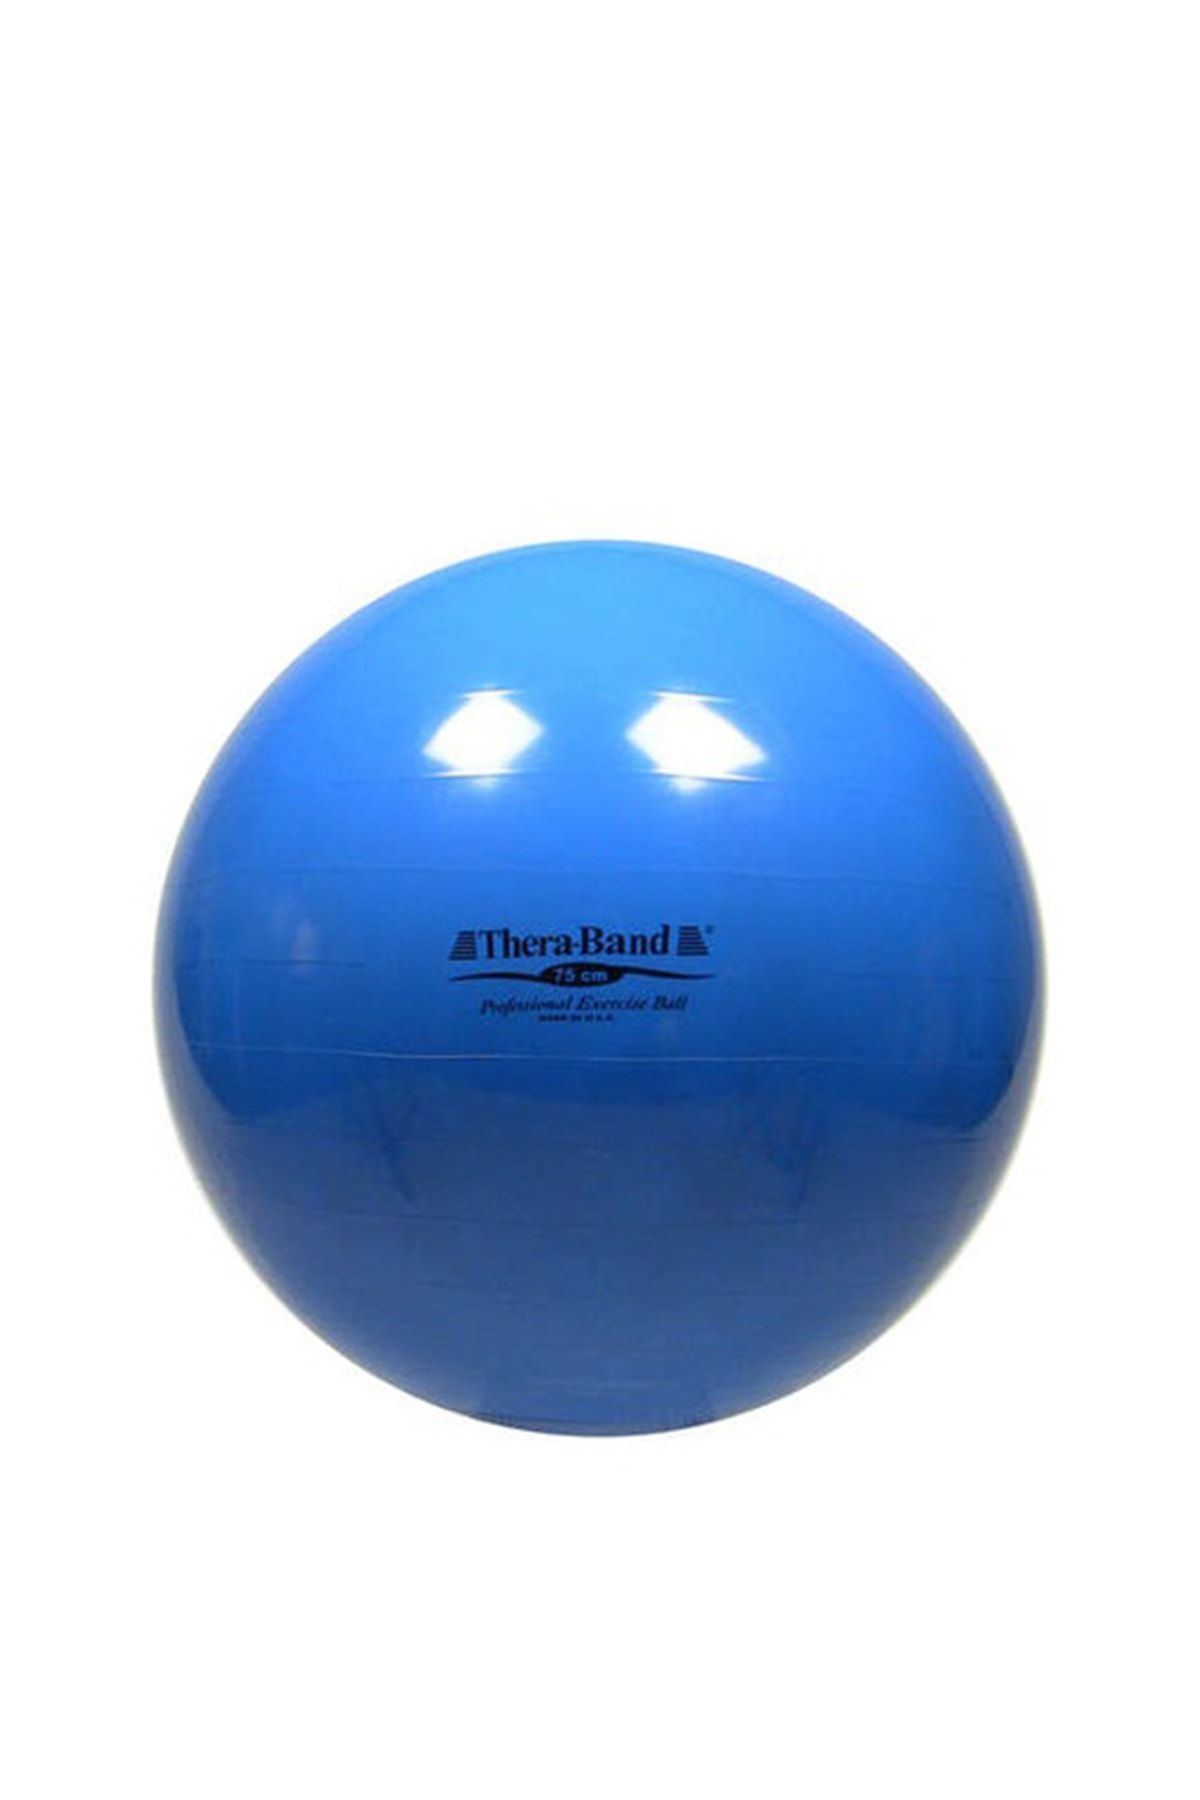 Theraband BLUE 75CM EXERCISE BALL